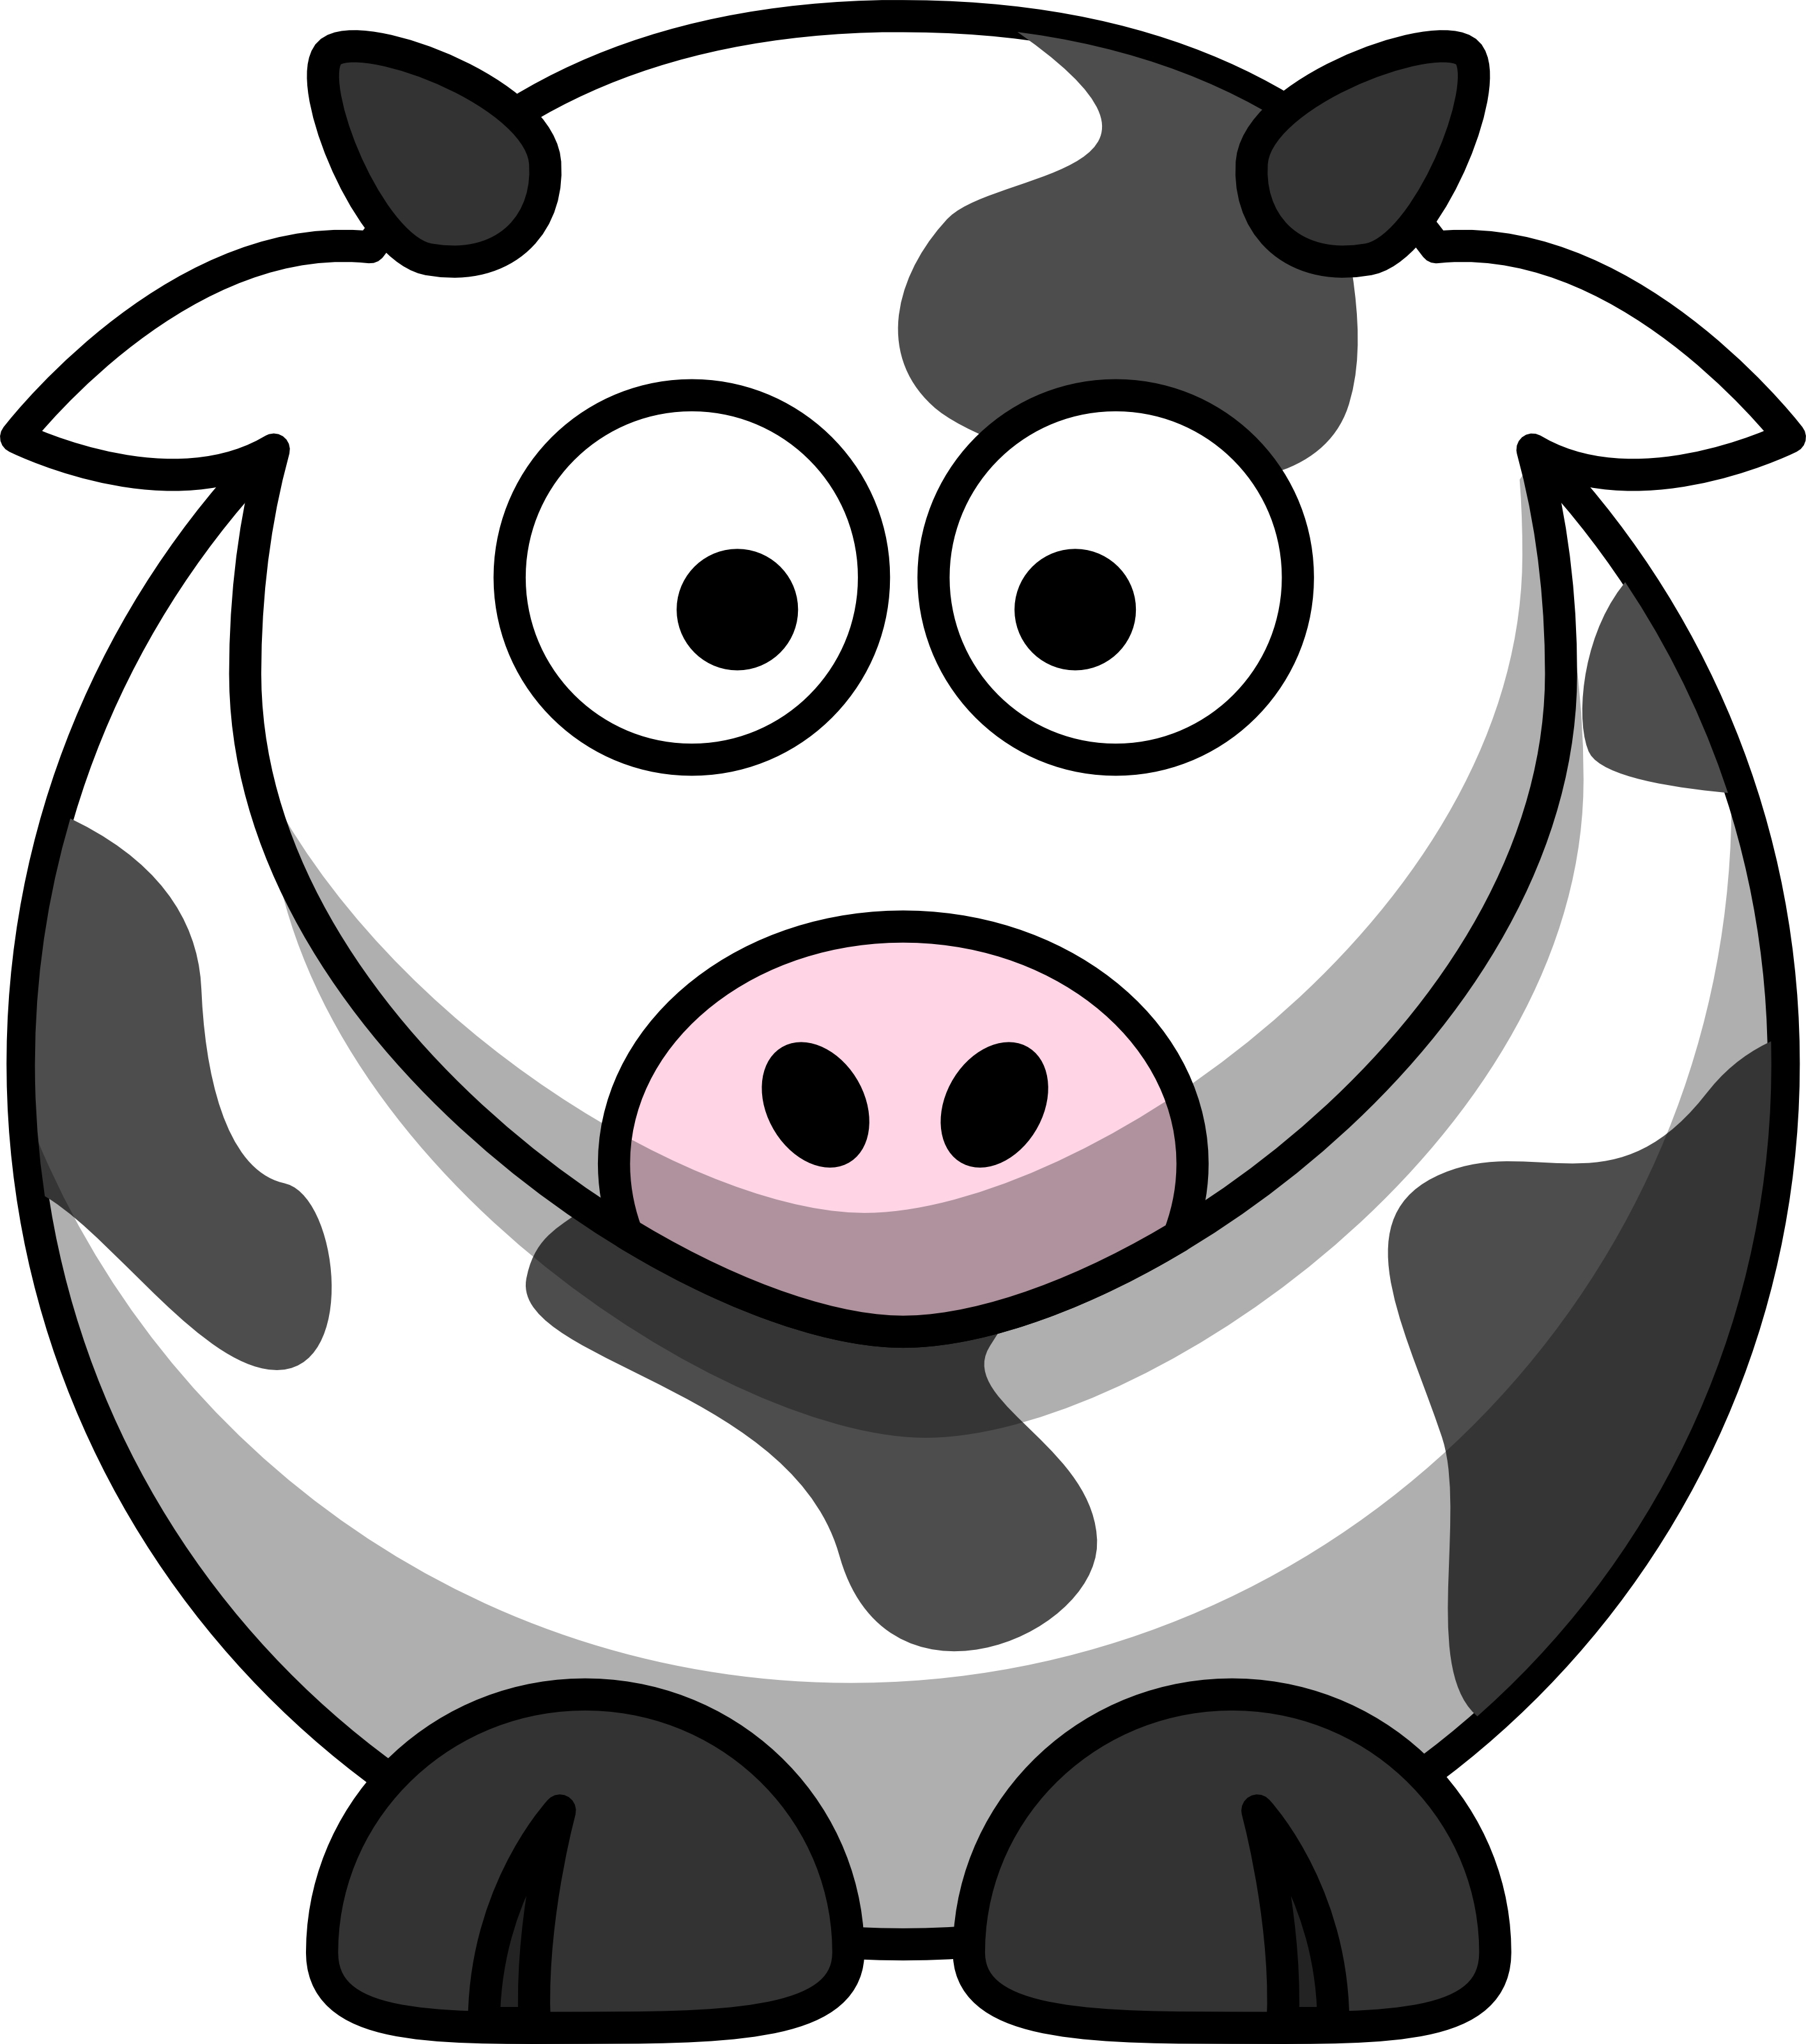 Free Cartoon Cow Clip Art ima - Fre Clip Art